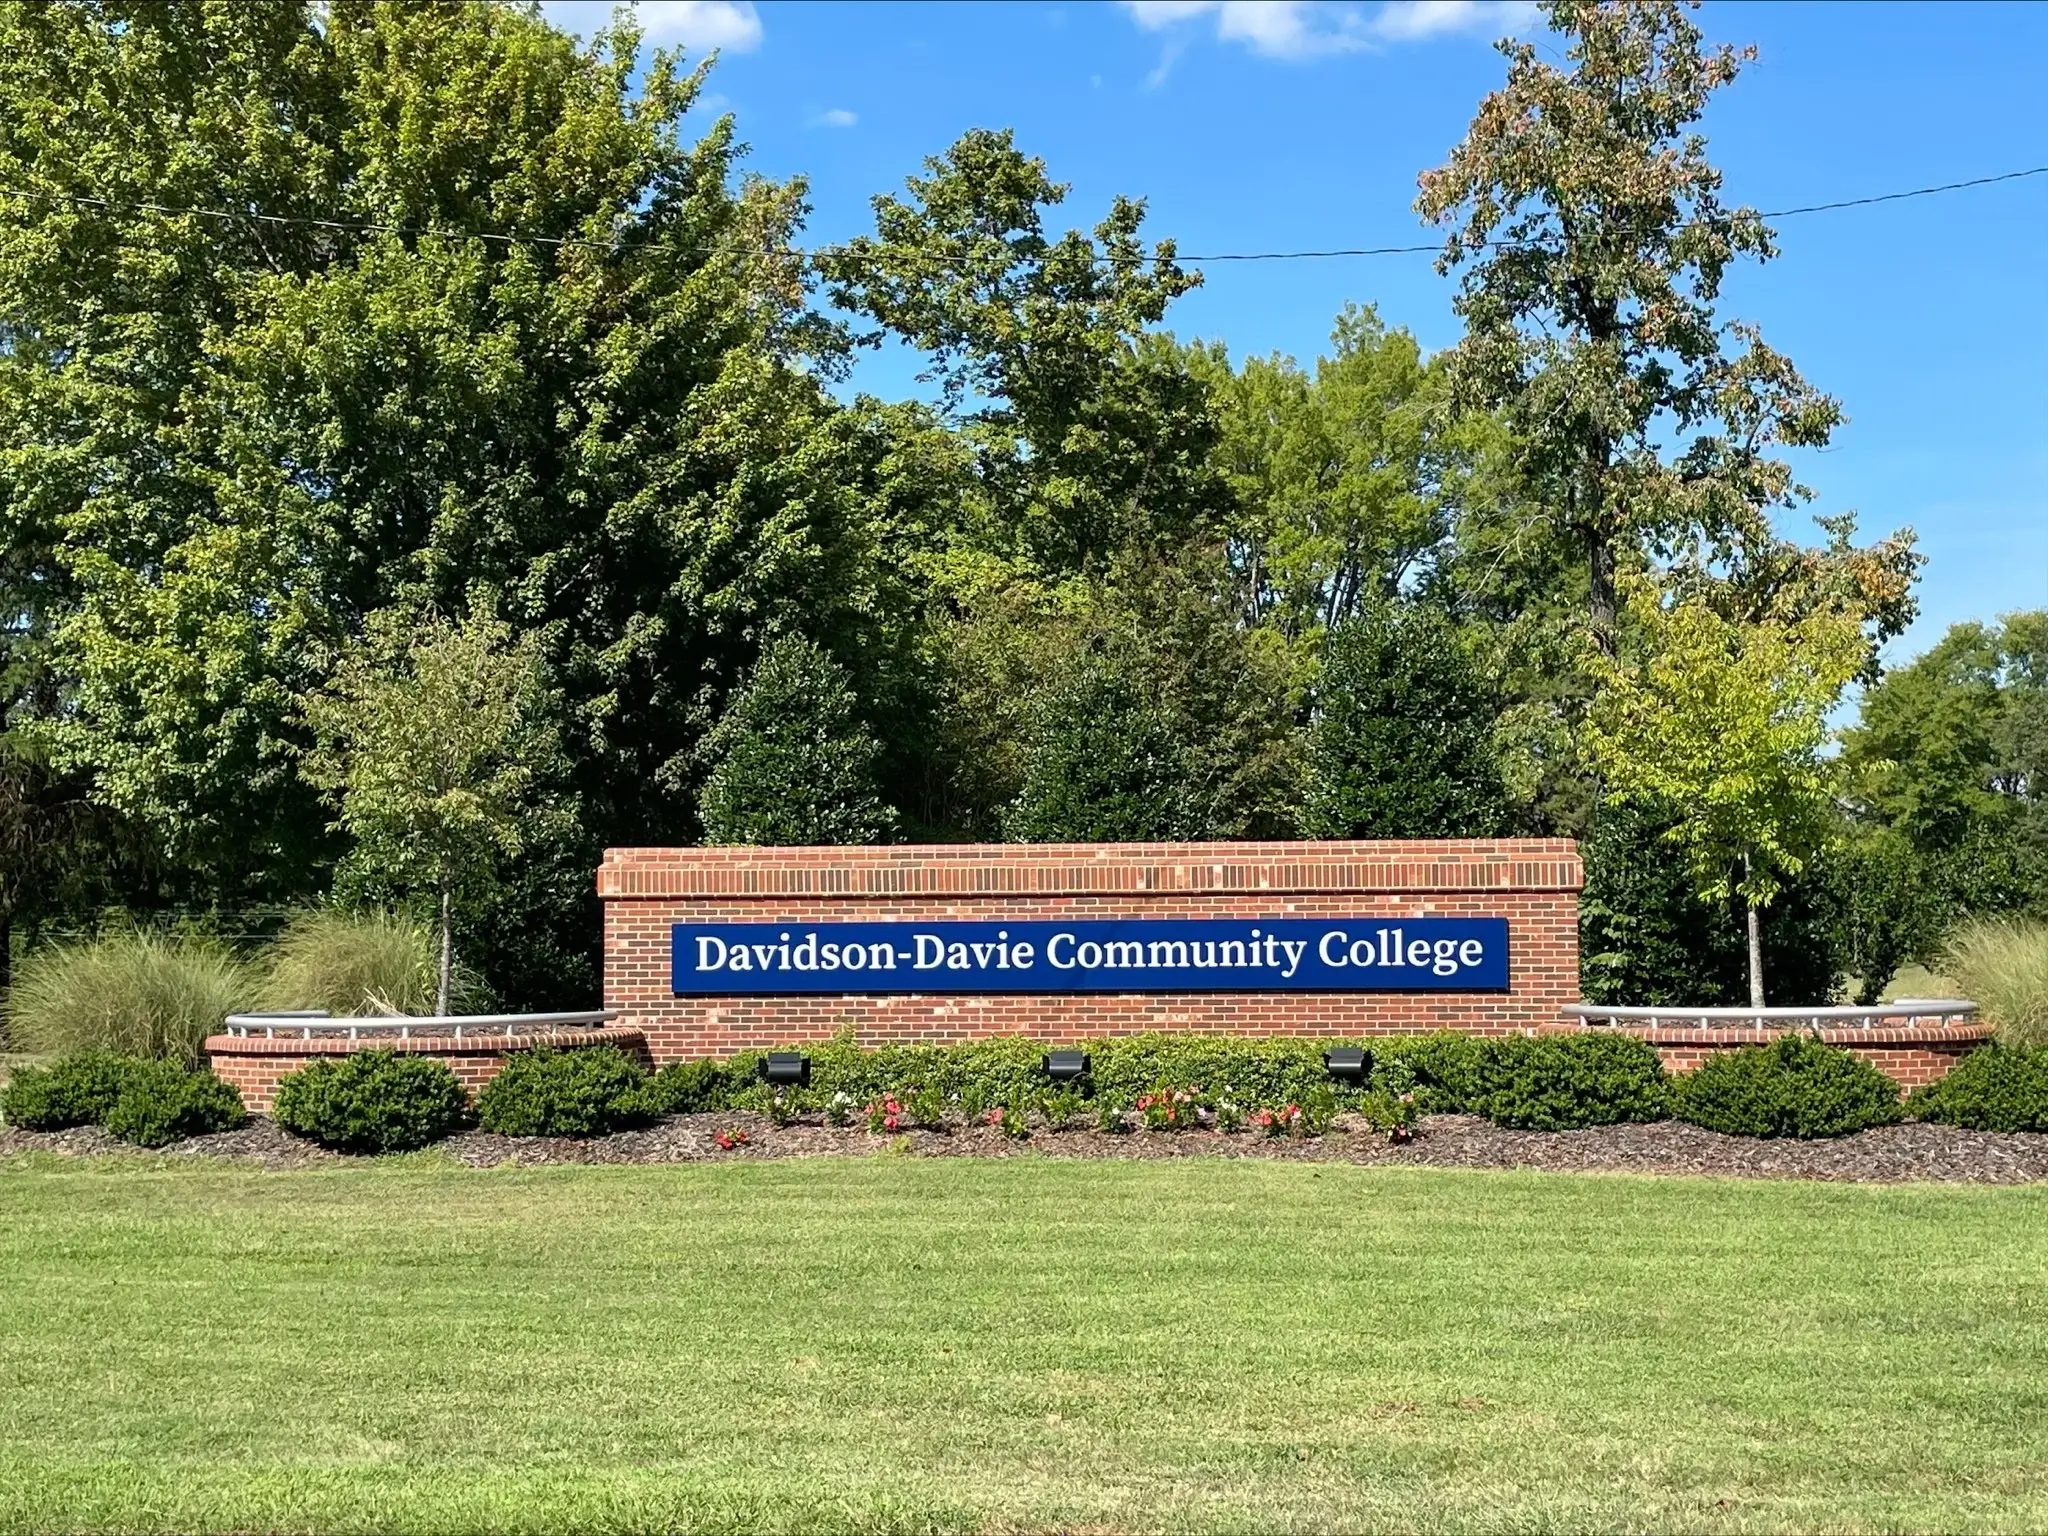 Davidson-Davie Community College campus sign